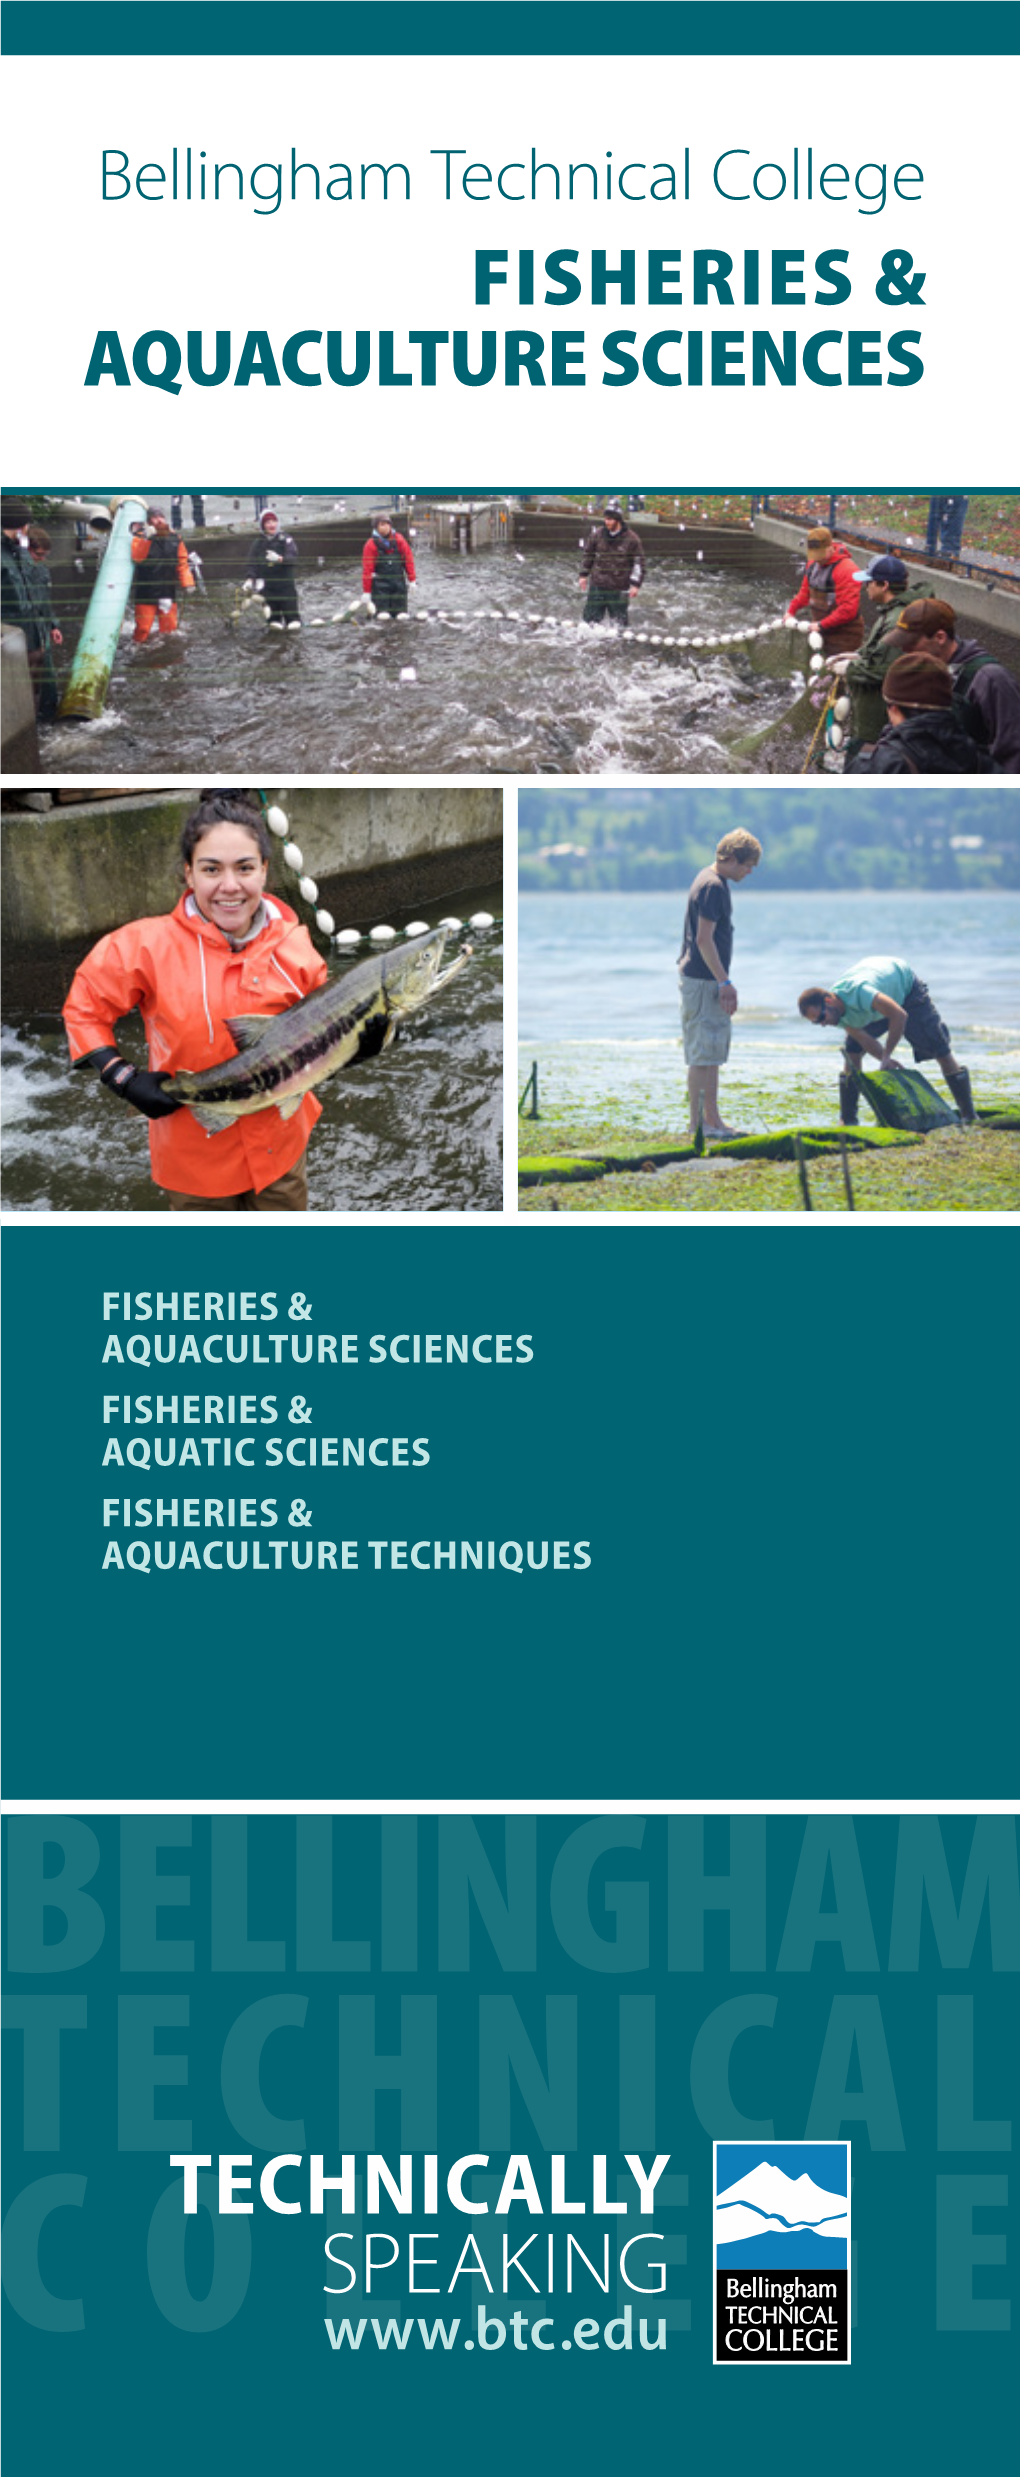 Fisheries & Aquaculture Sciences